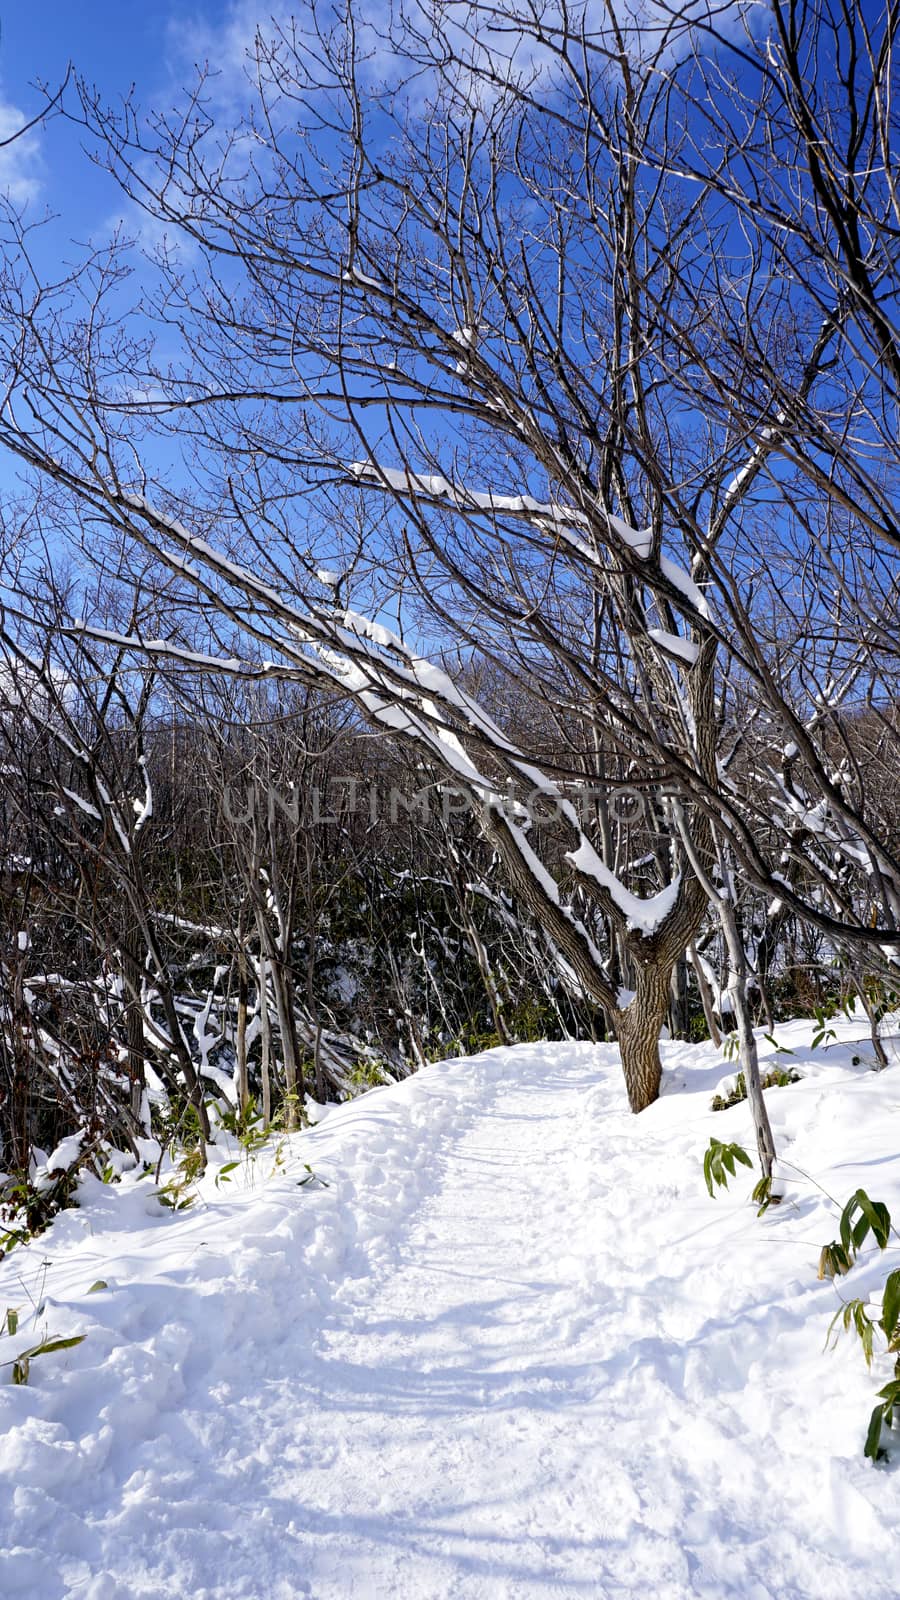 Snow and walkway in the forest Noboribetsu onsen snow winter by polarbearstudio